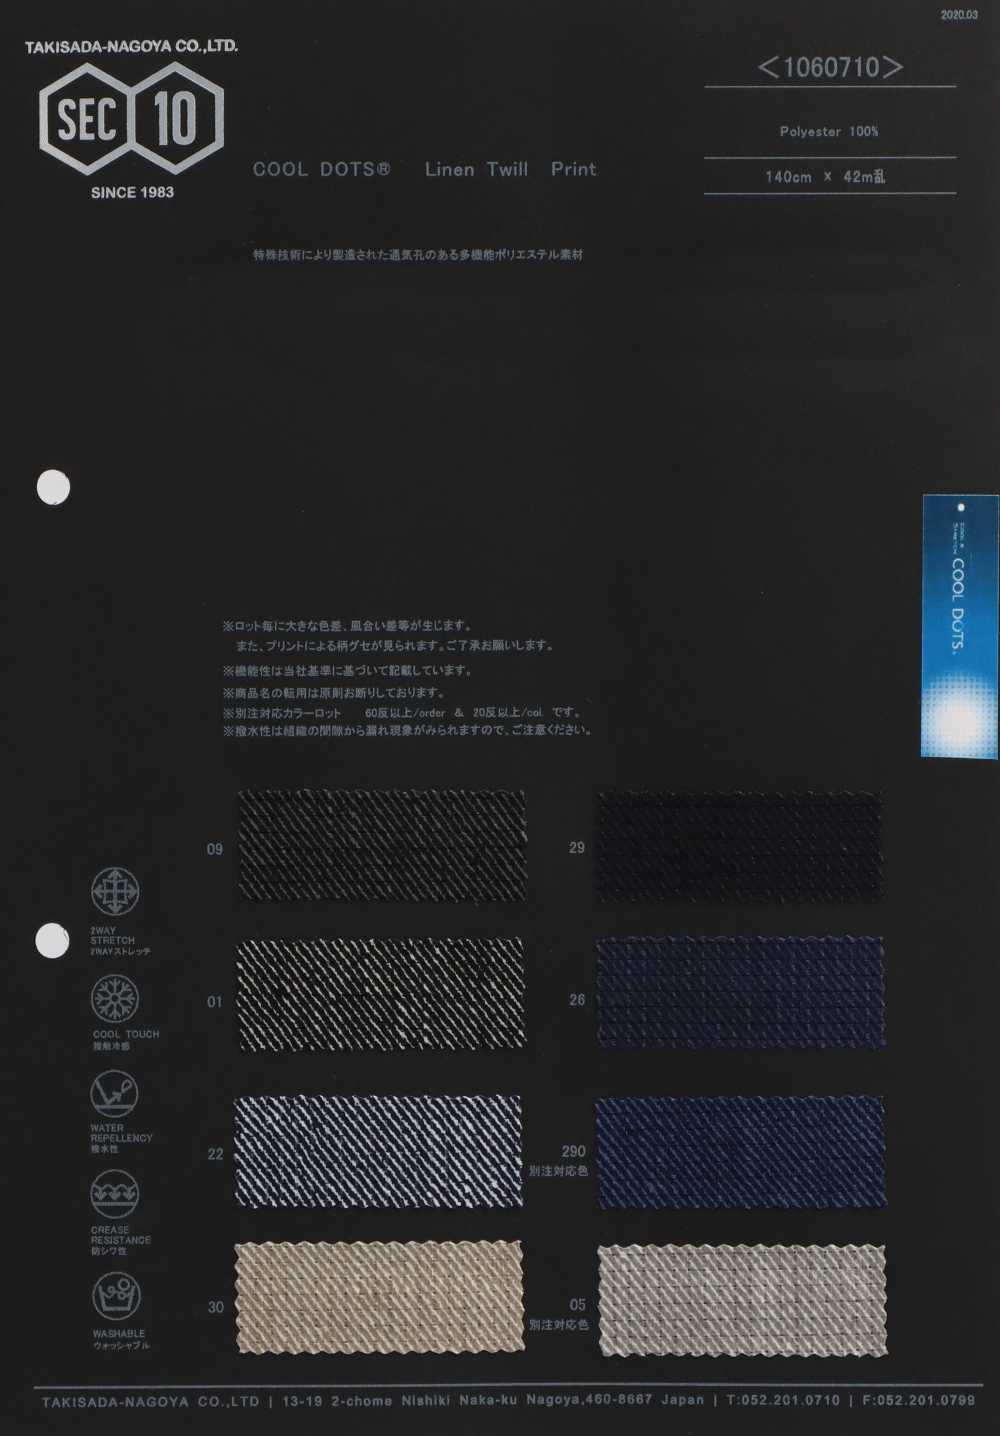 1060710 COOLDOTS Impression Kersey[Fabrication De Textile] Takisada Nagoya